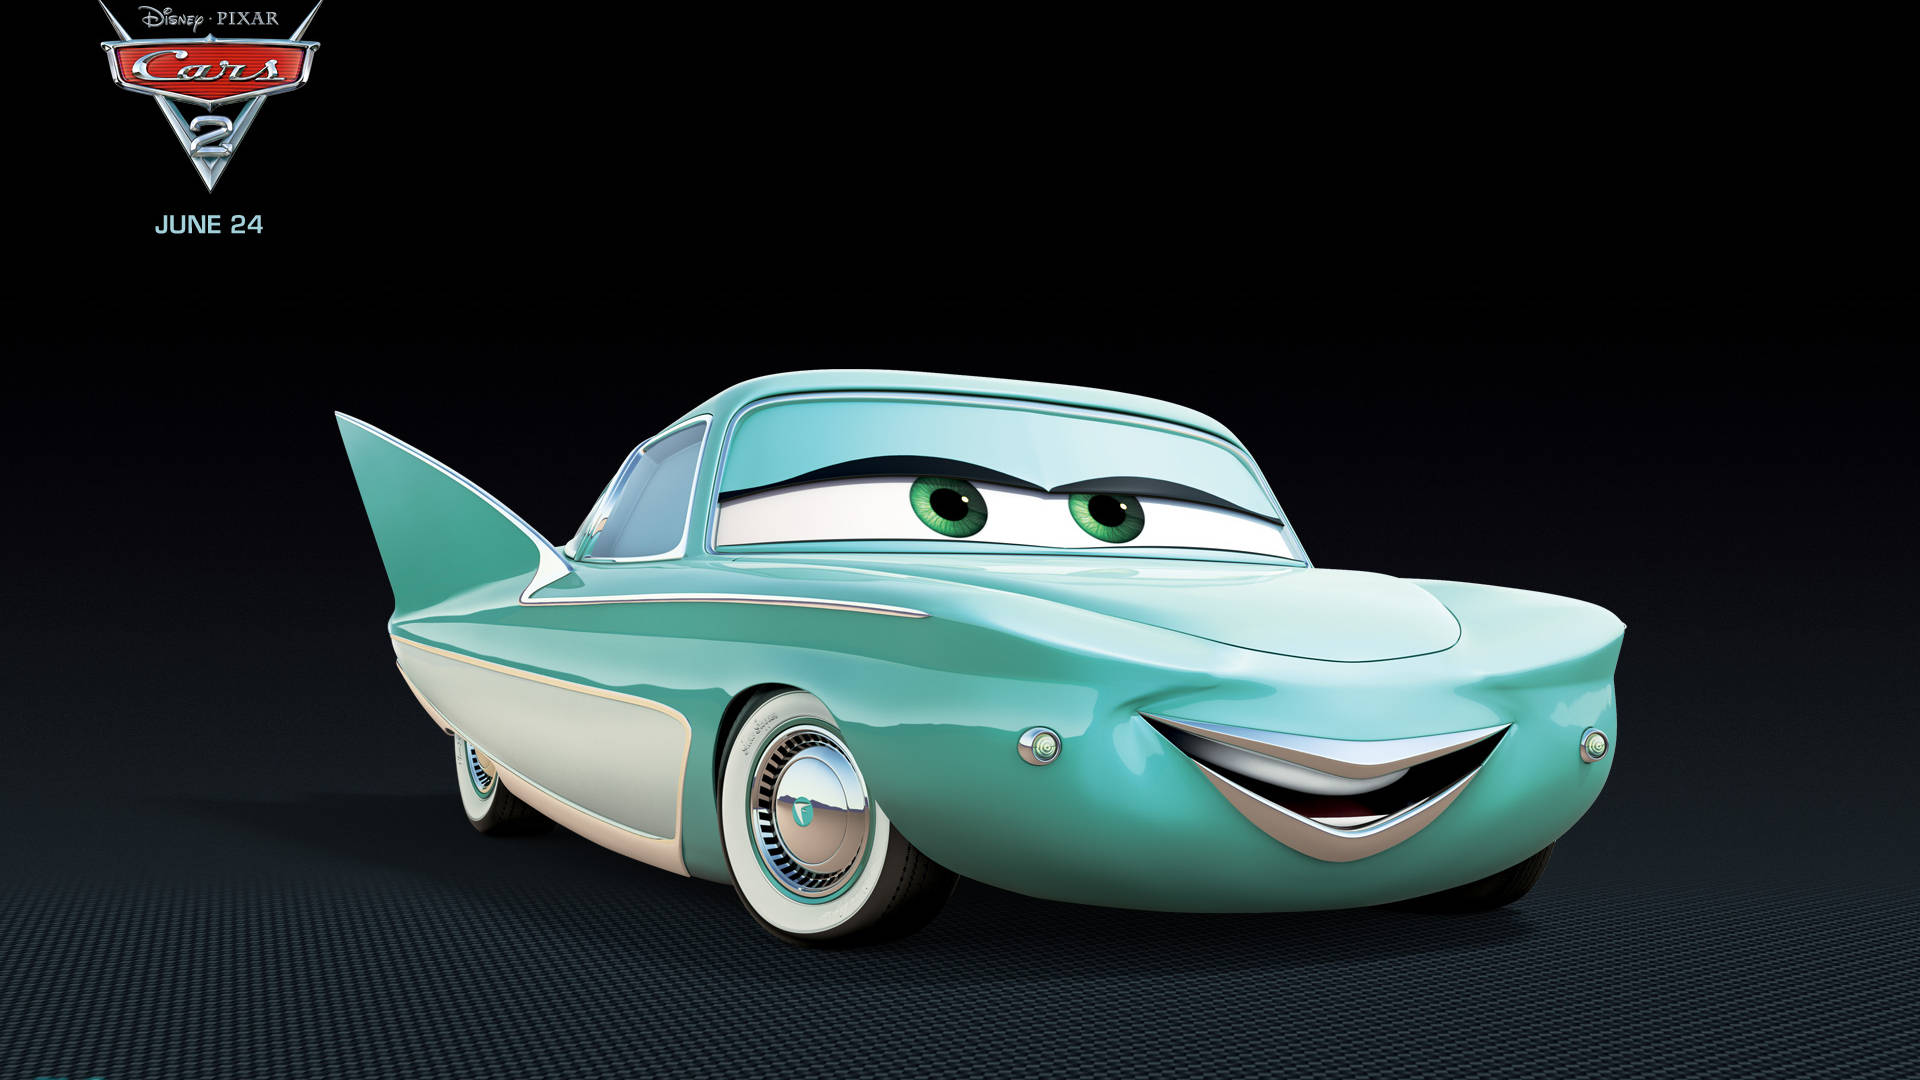 Flovon Pixars Cars Wallpaper